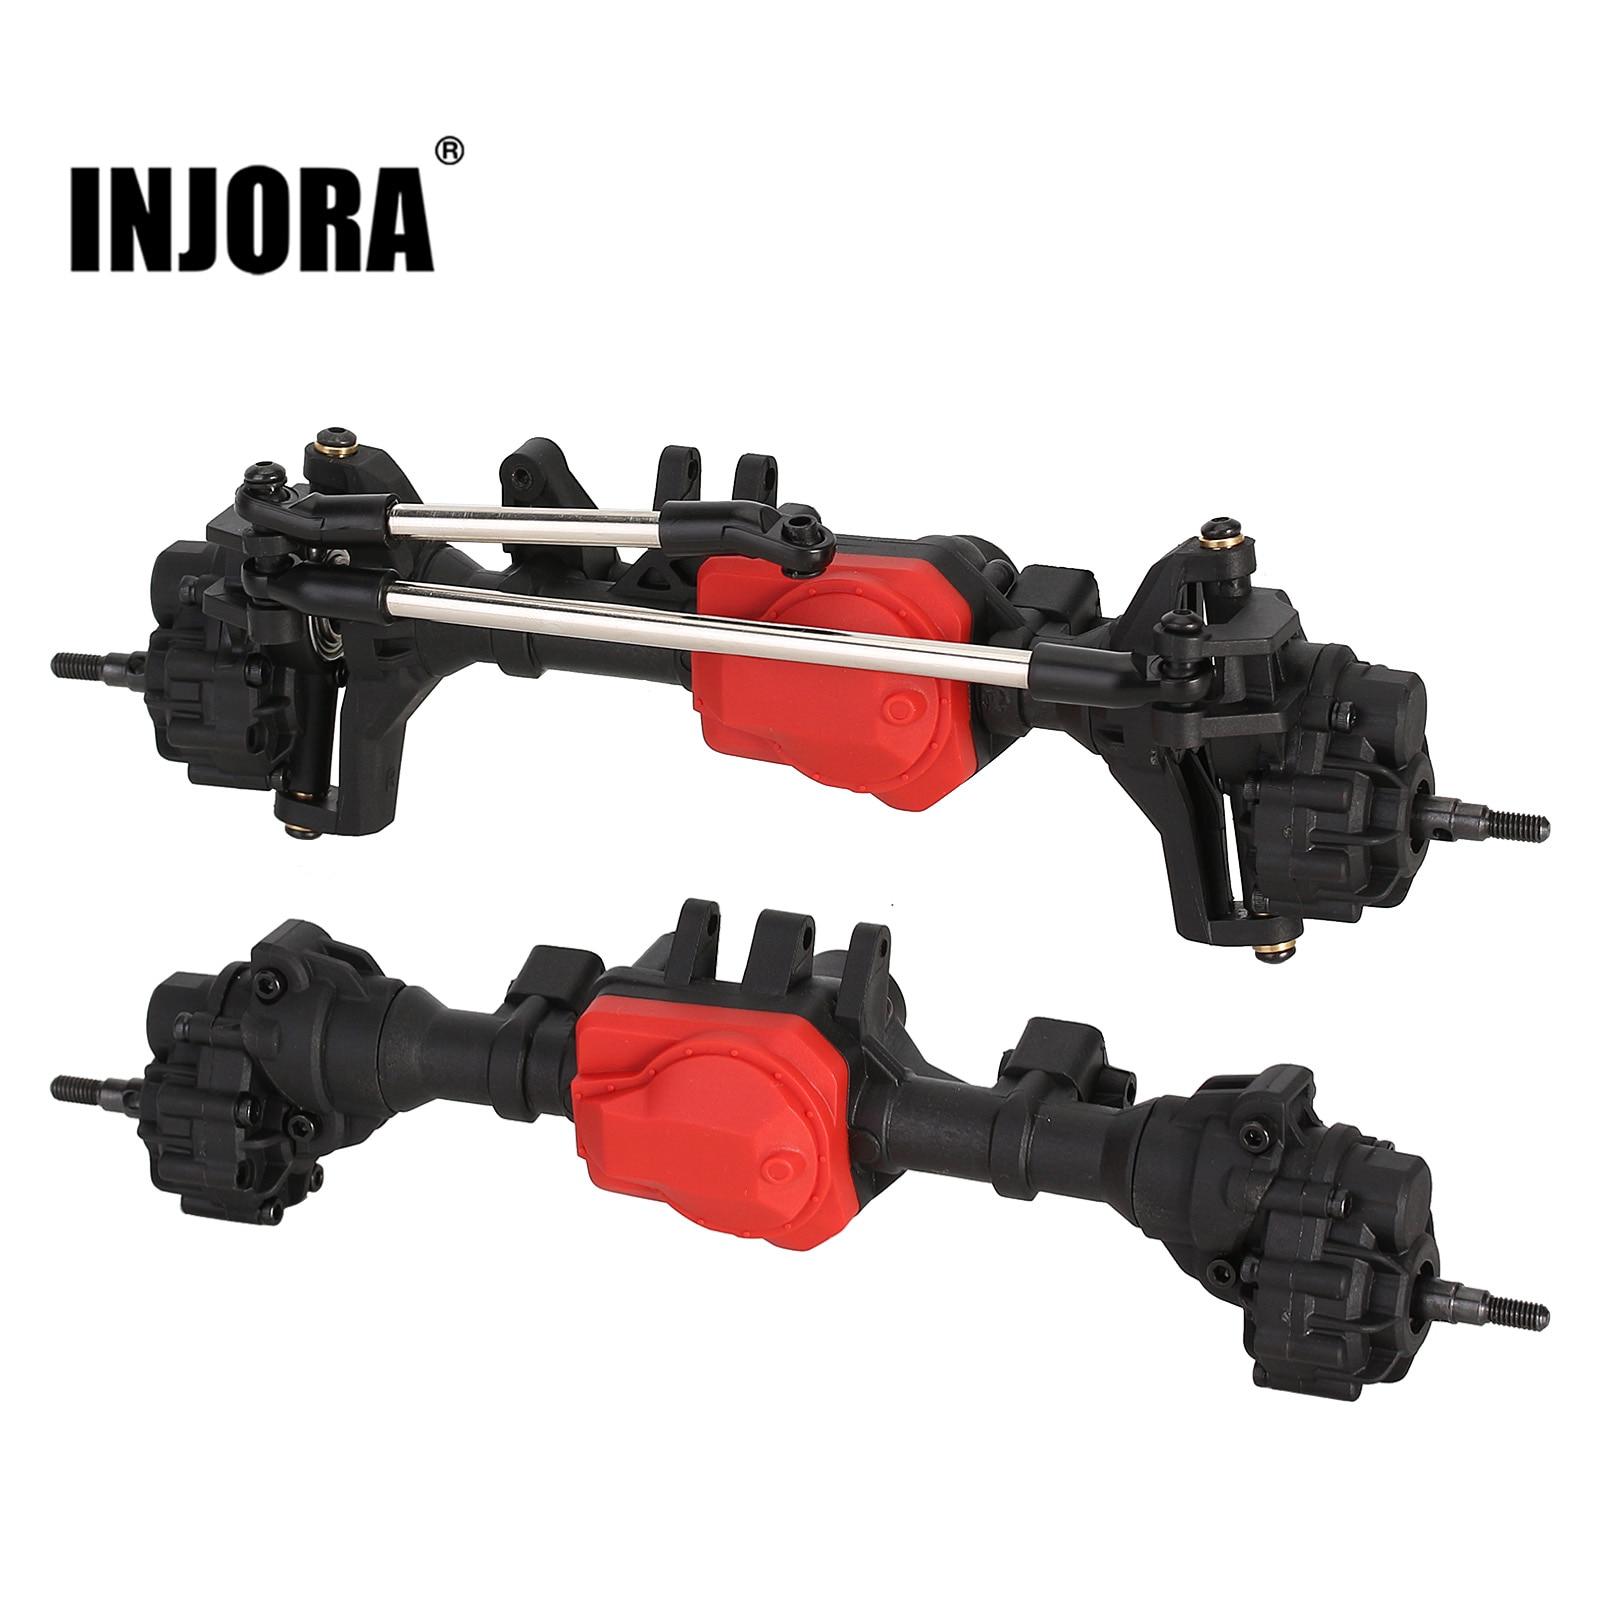 INJORA-Complete-Front-Rear-Straight-Portal-Axle-for-1-10-RC-Crawler-Car-TRX4-TRX-4.jpg